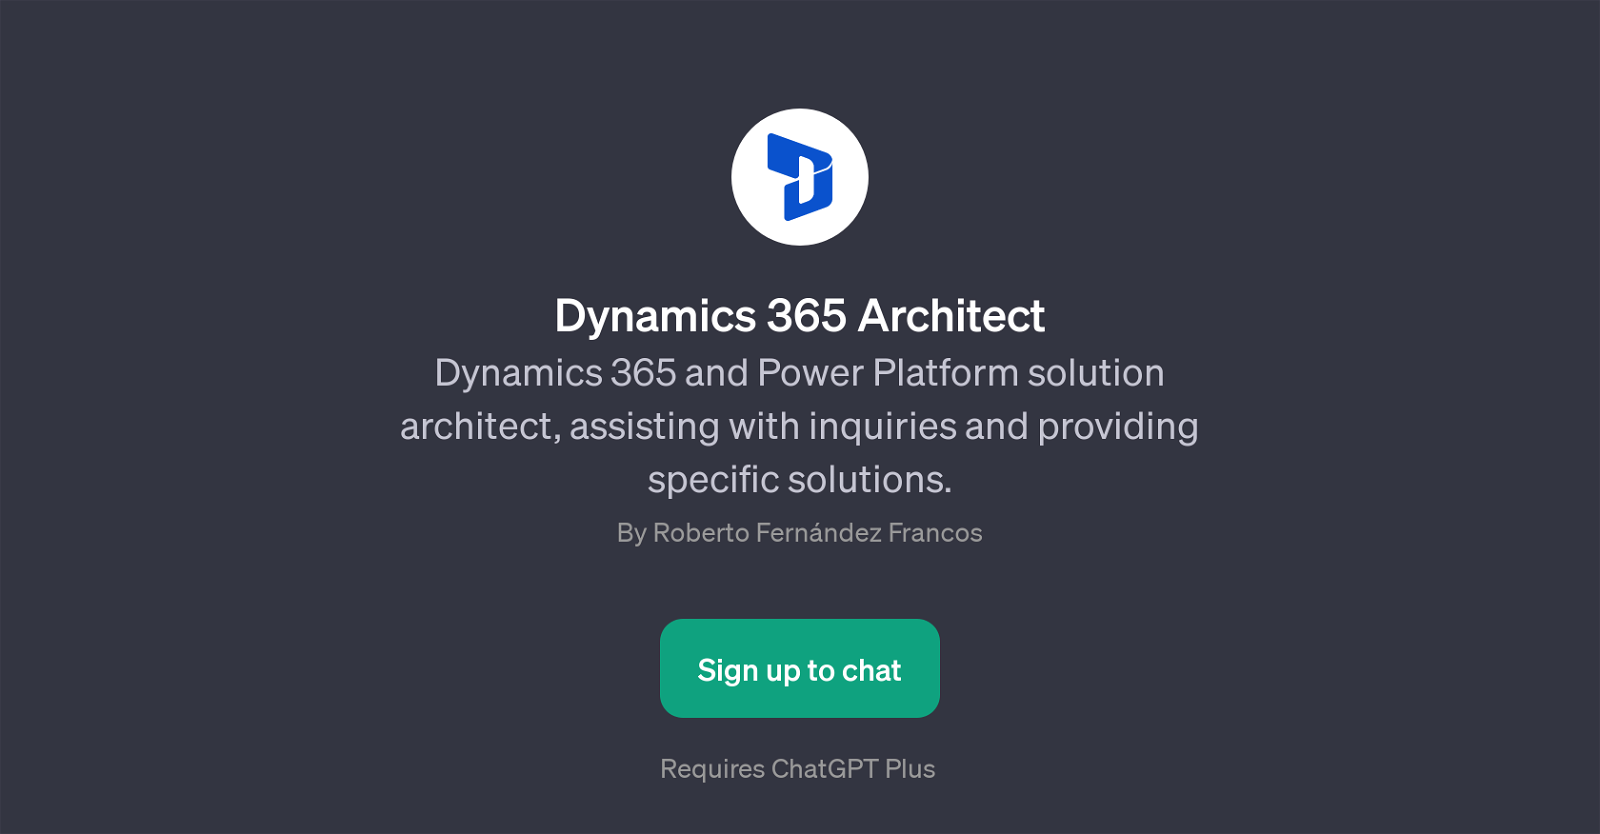 Dynamics 365 Architect website